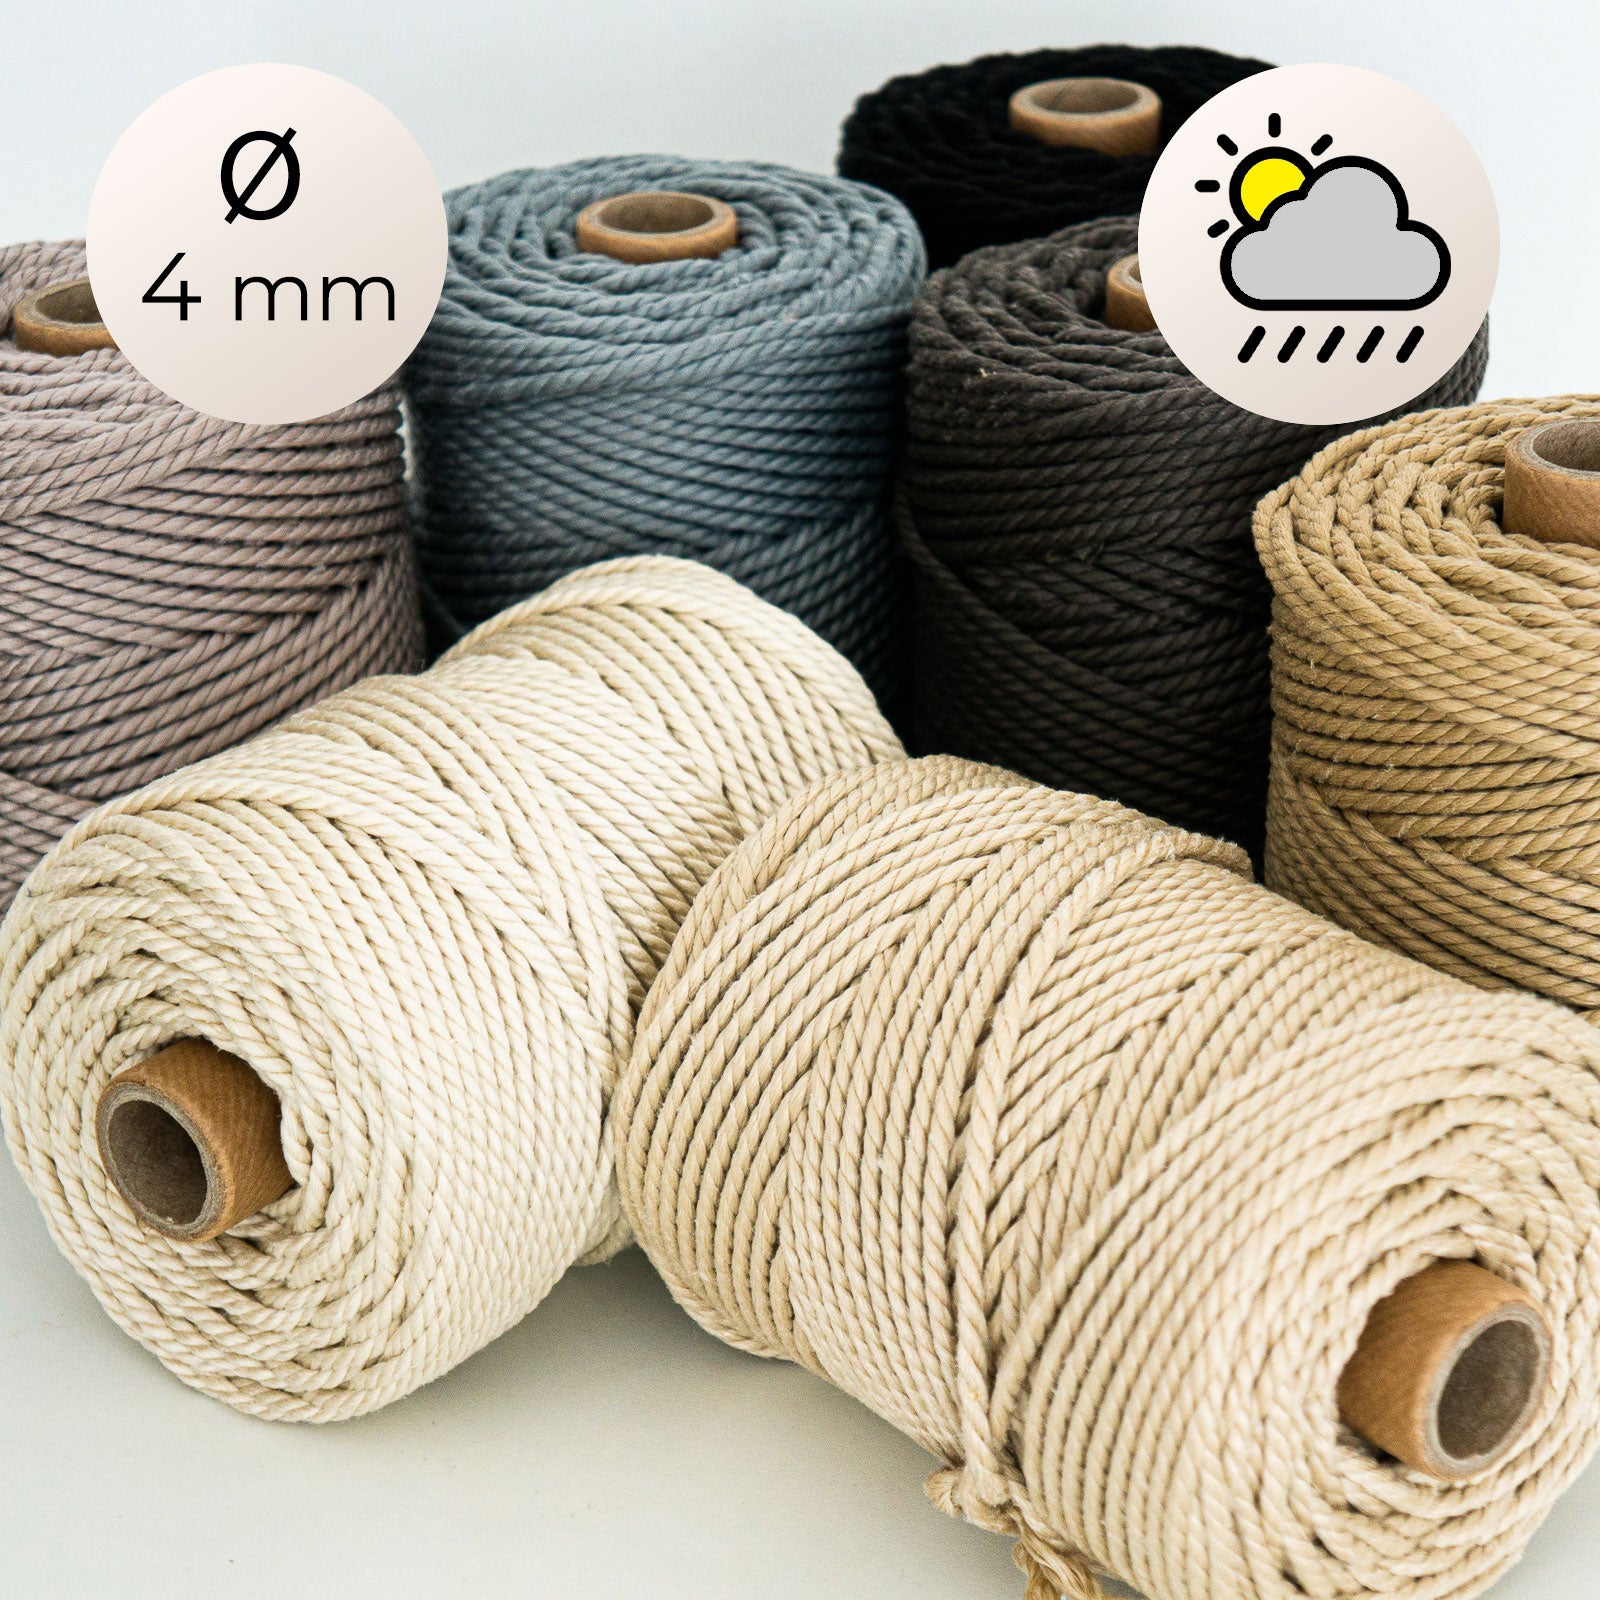 Macrame rope for outdoor – Macranova